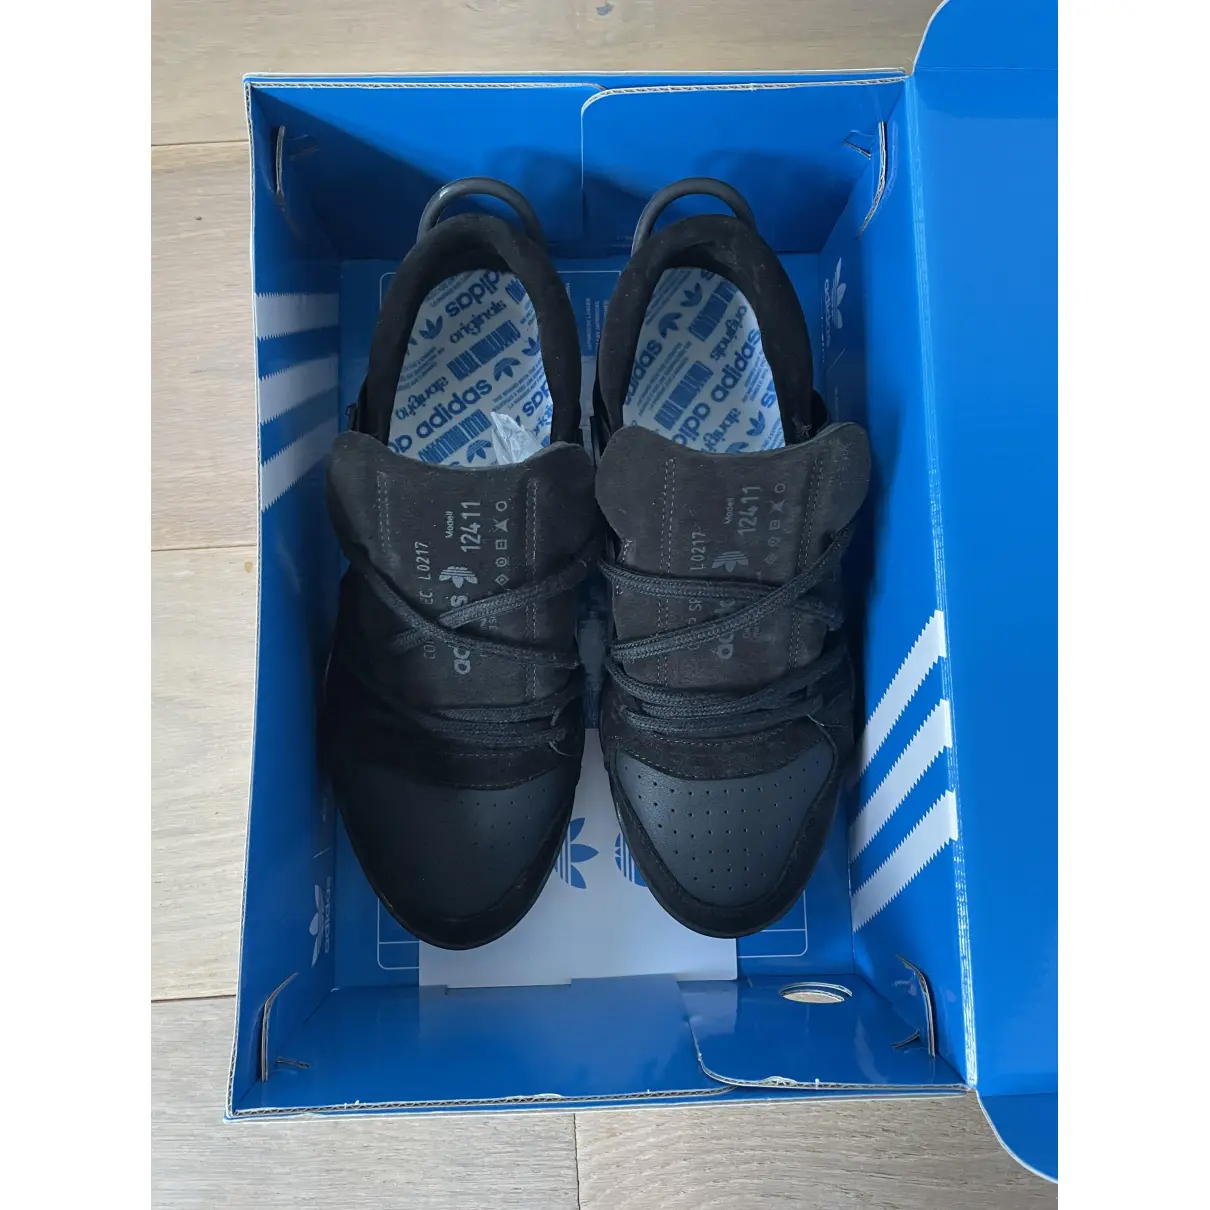 Buy Adidas Originals x Alexander Wang Leather trainers online